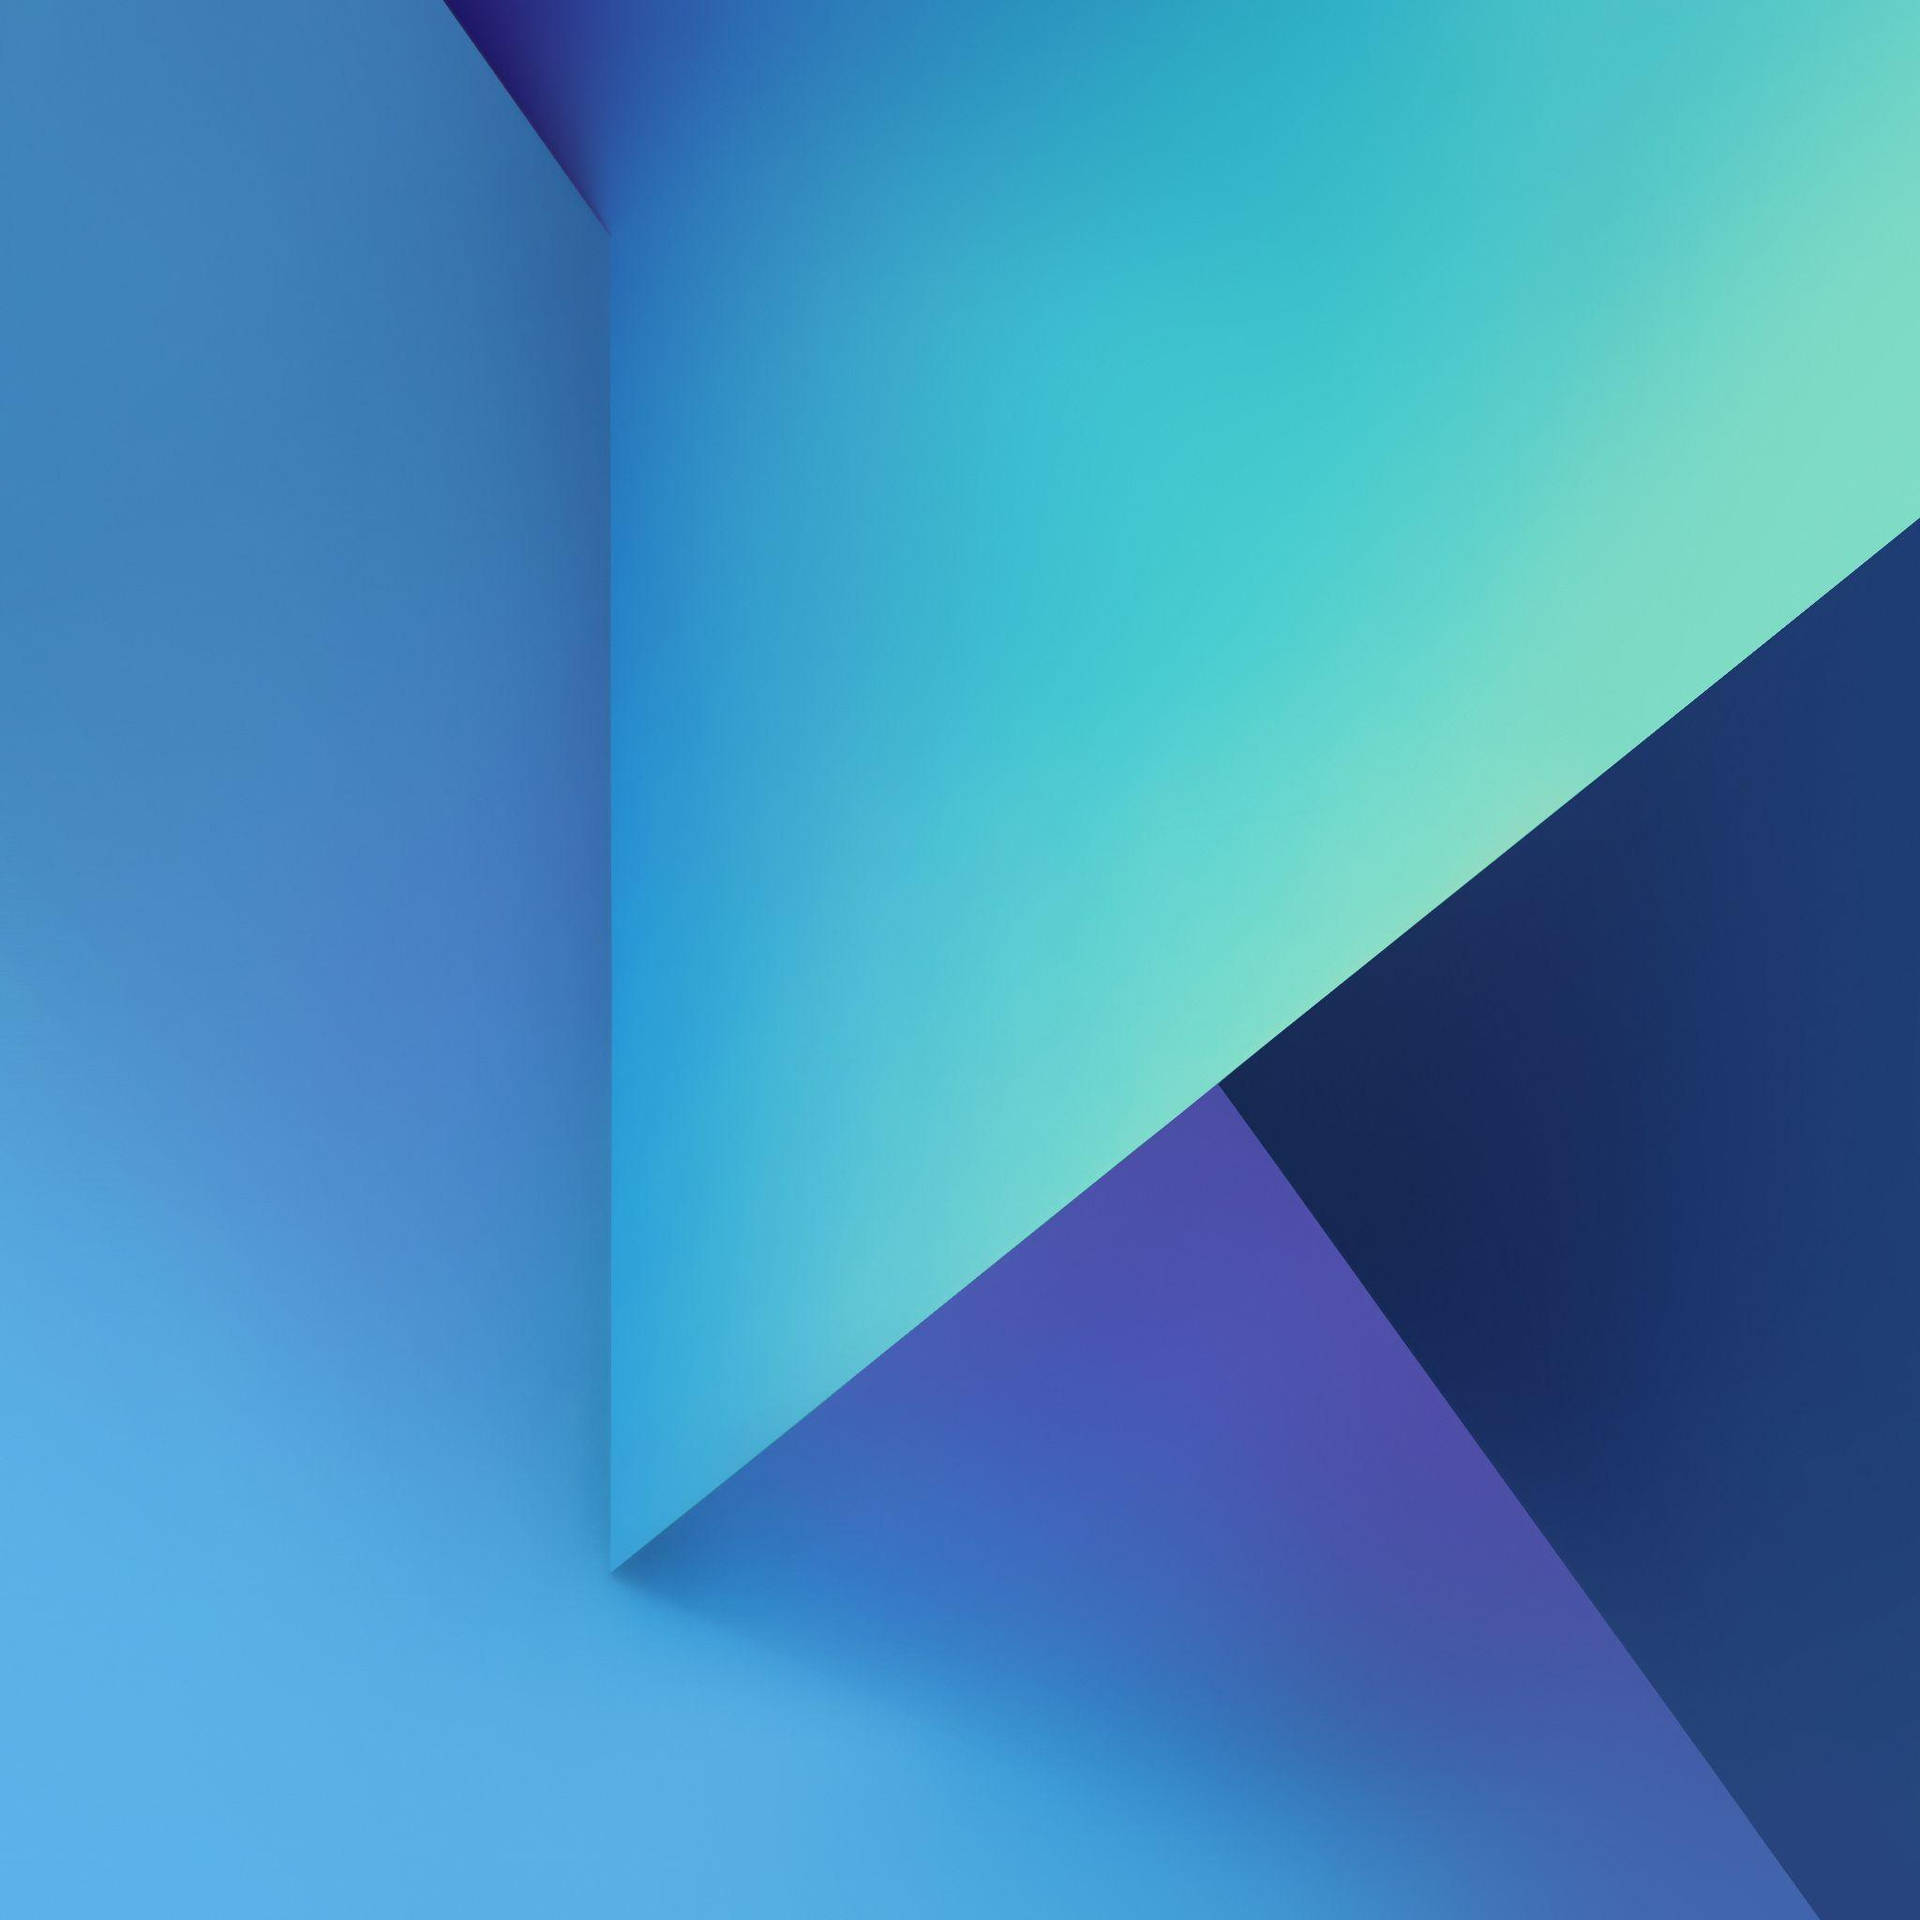 Iridescent Blue Shapes Samsung Galaxy Tablet Wallpaper